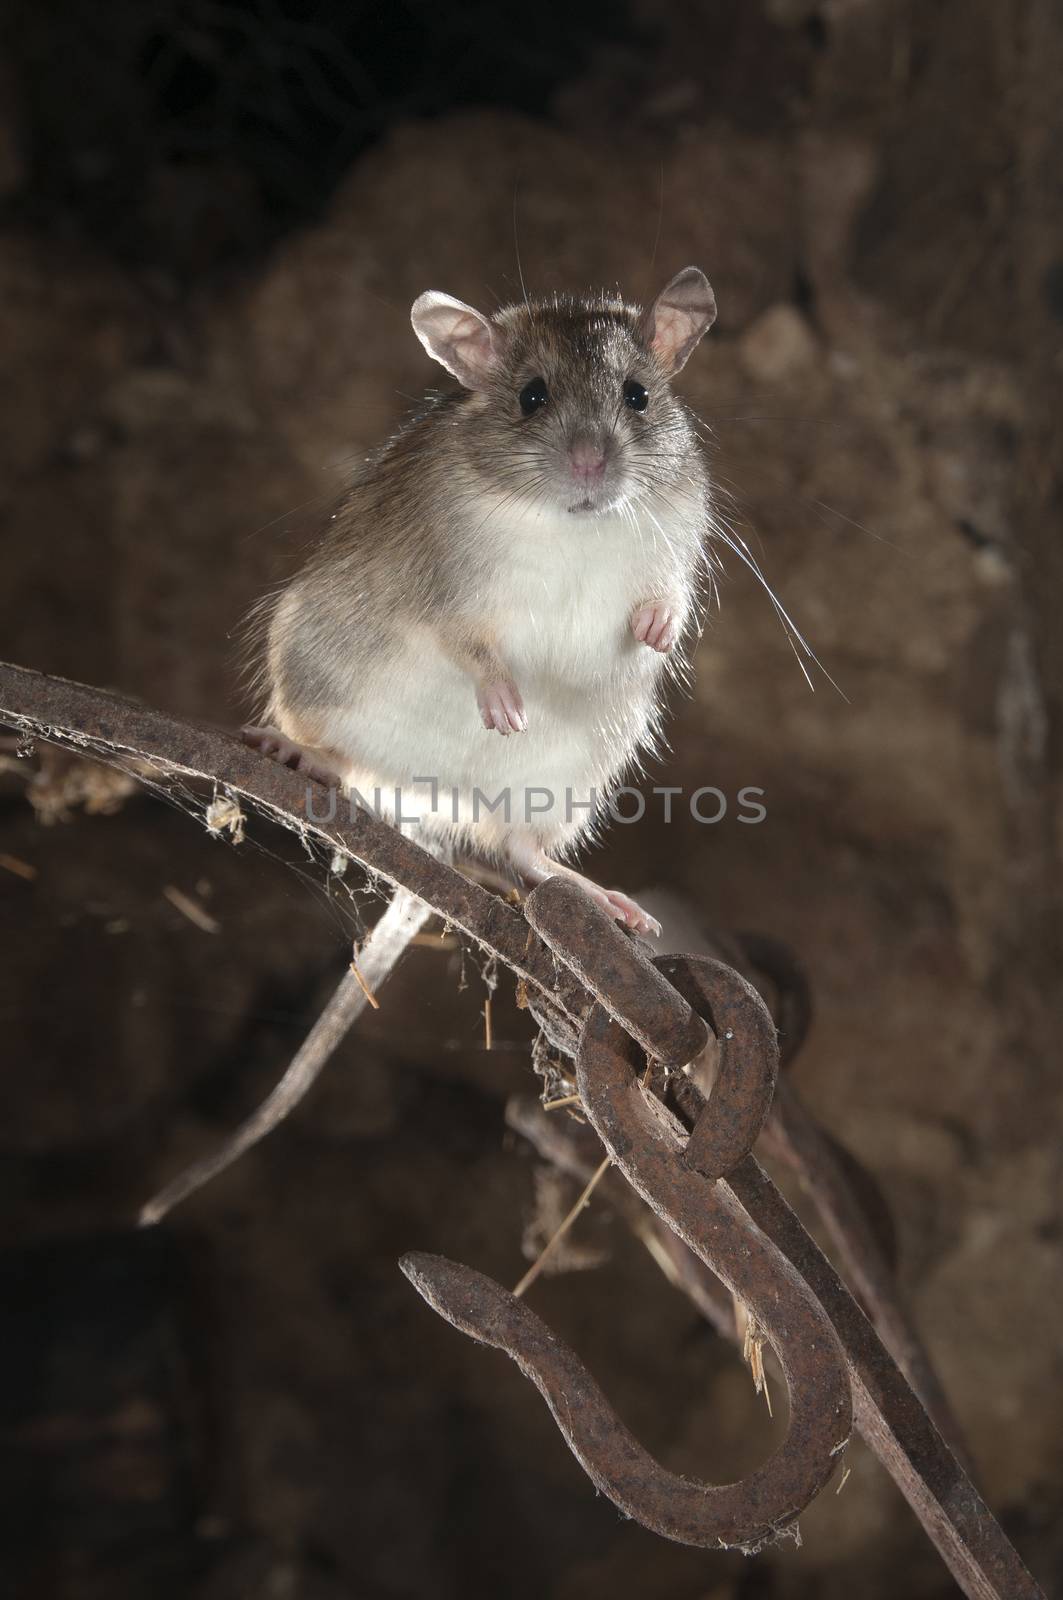 Black rat or field rat Portrait in an old haystack, Rattus rattu by jalonsohu@gmail.com